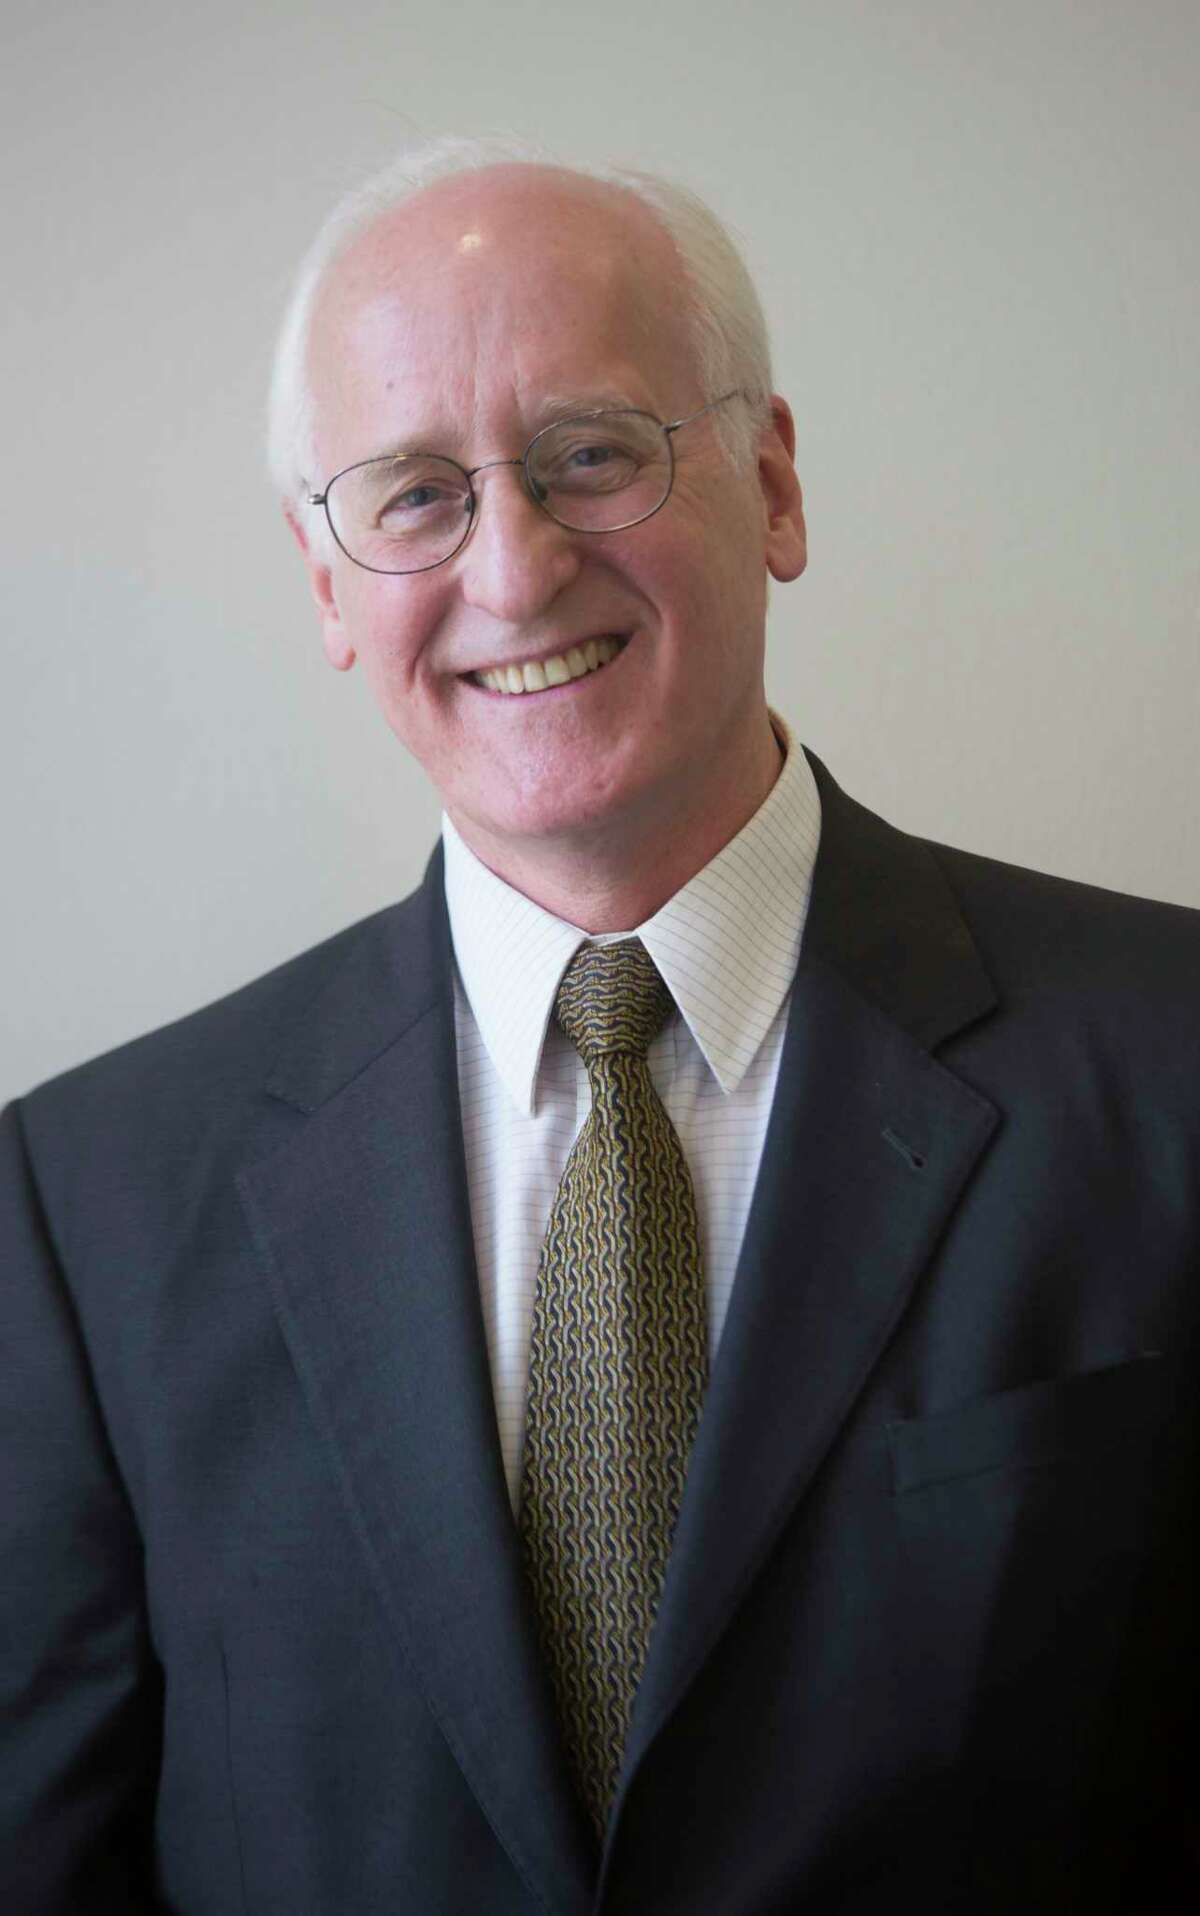 Michael Landrum (R), candidate for Civil District Judge 11